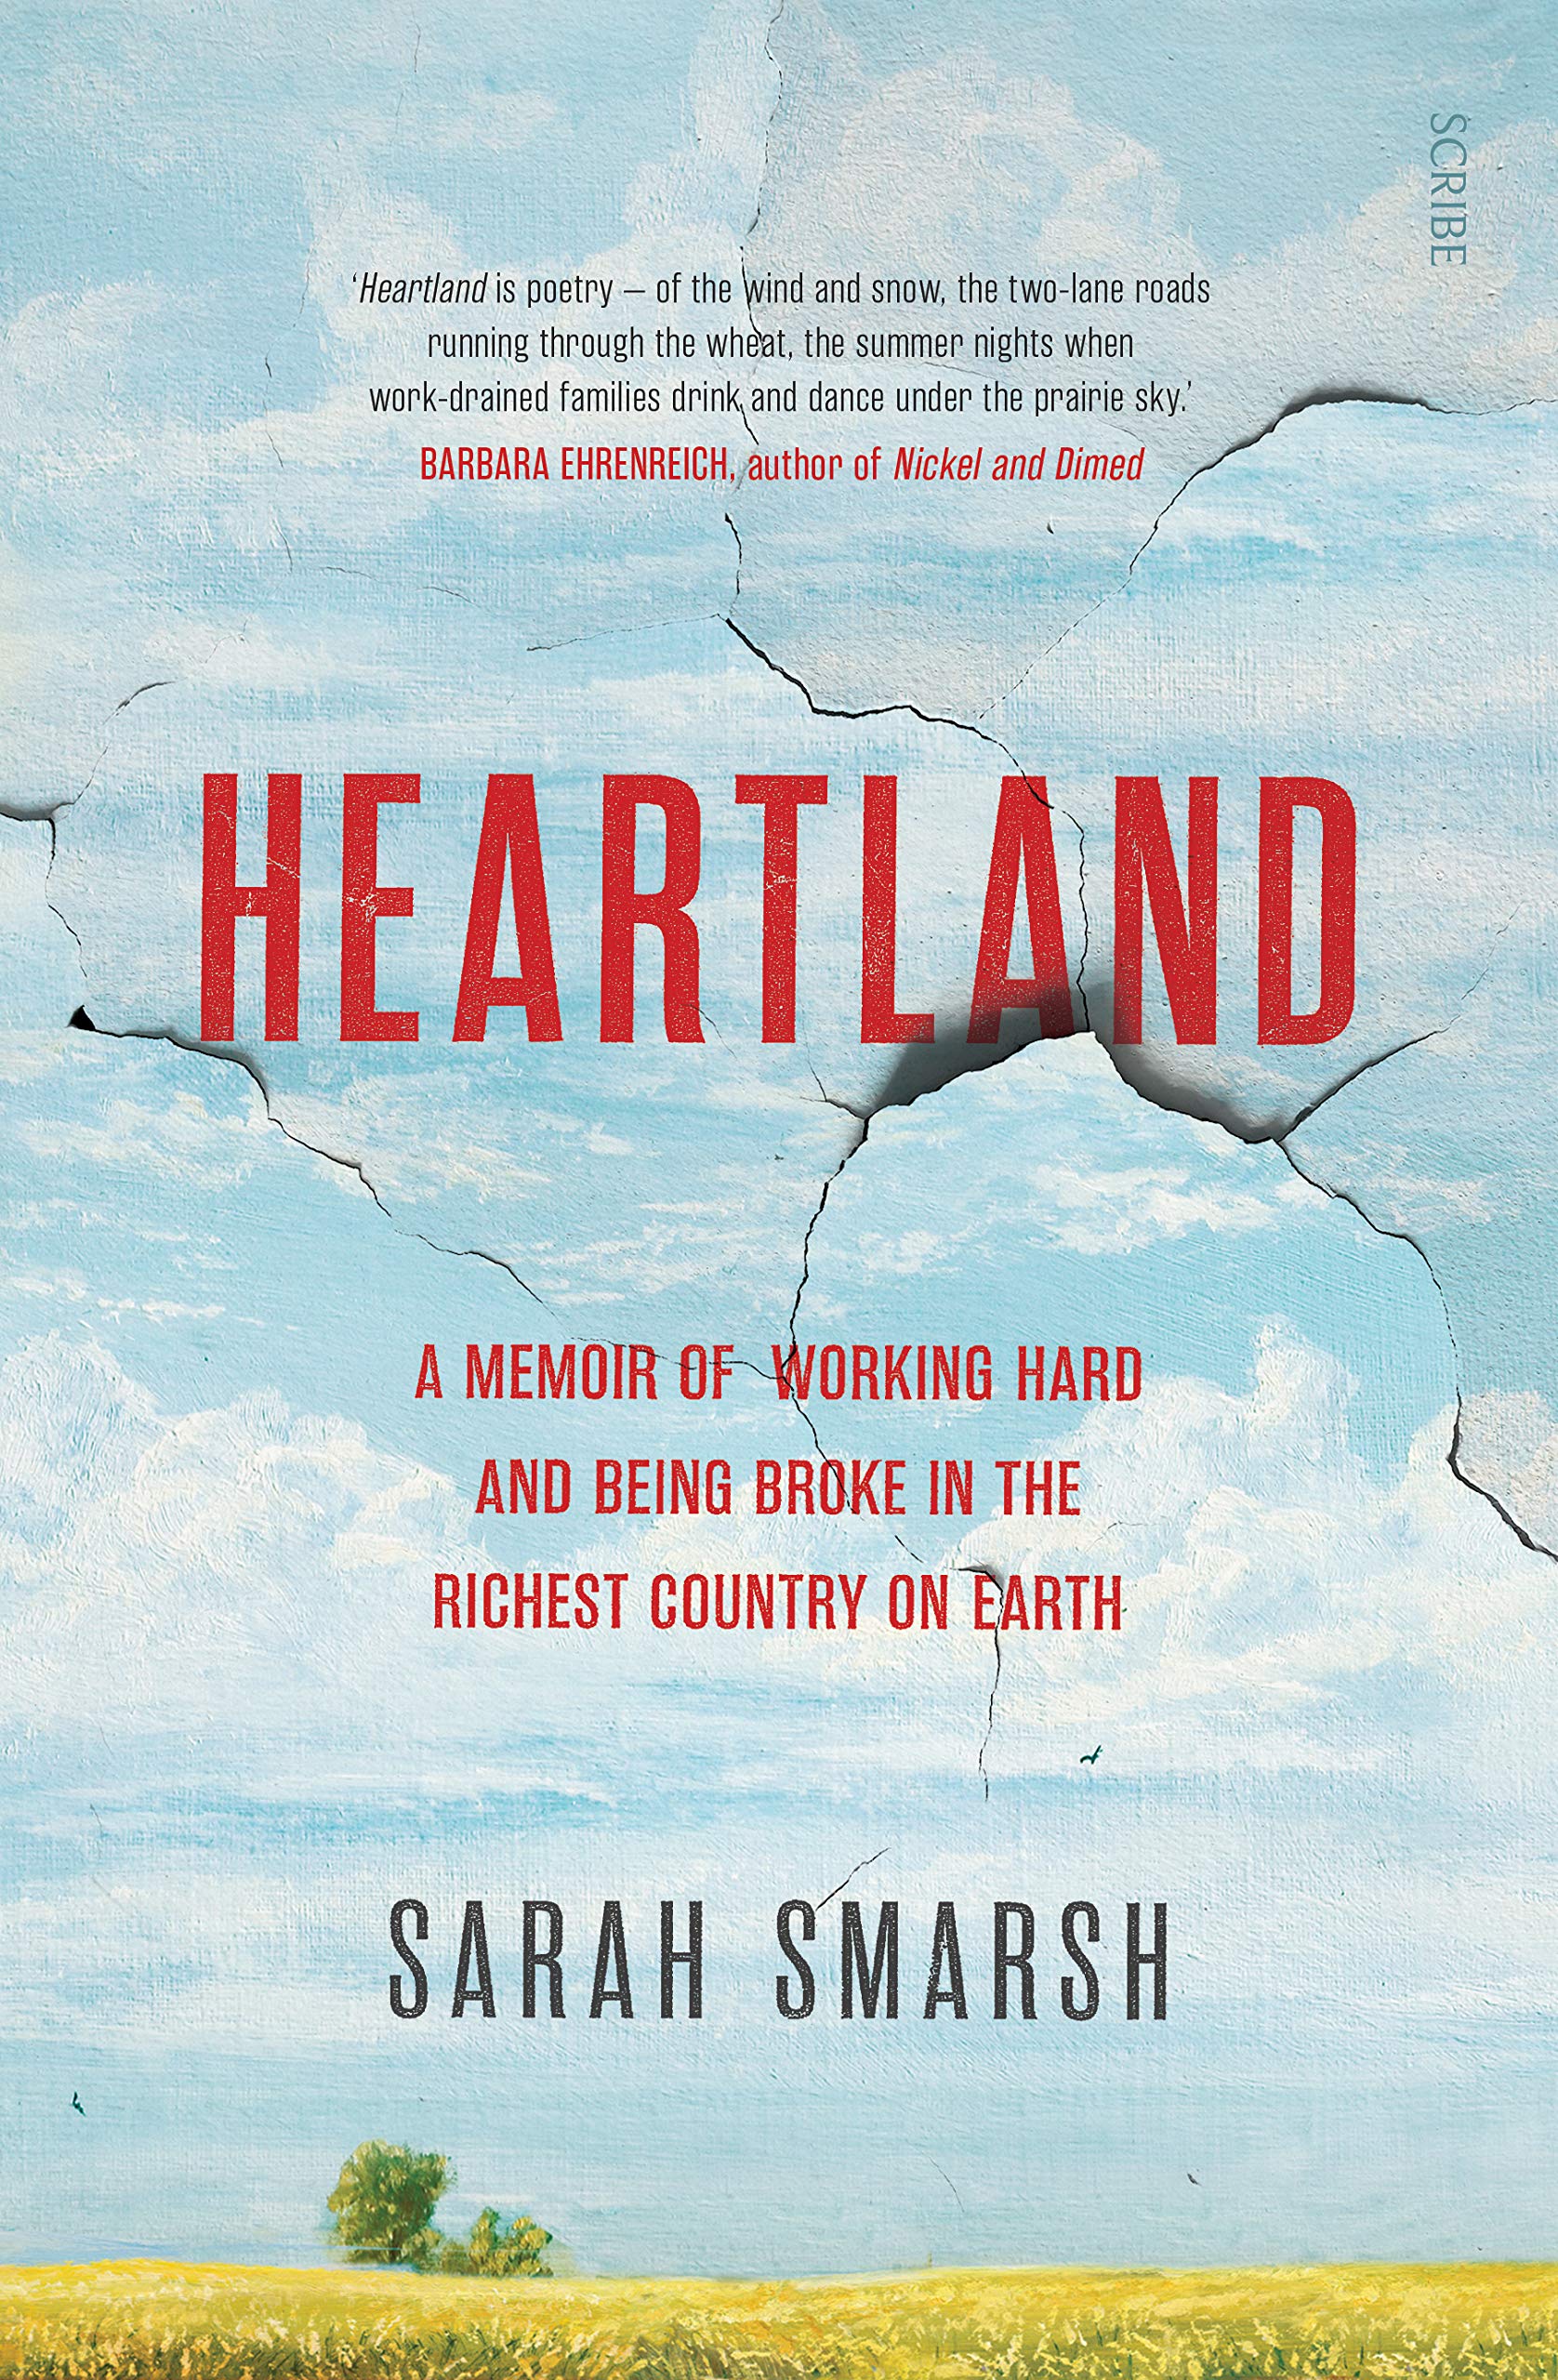 Image for "Heartland"